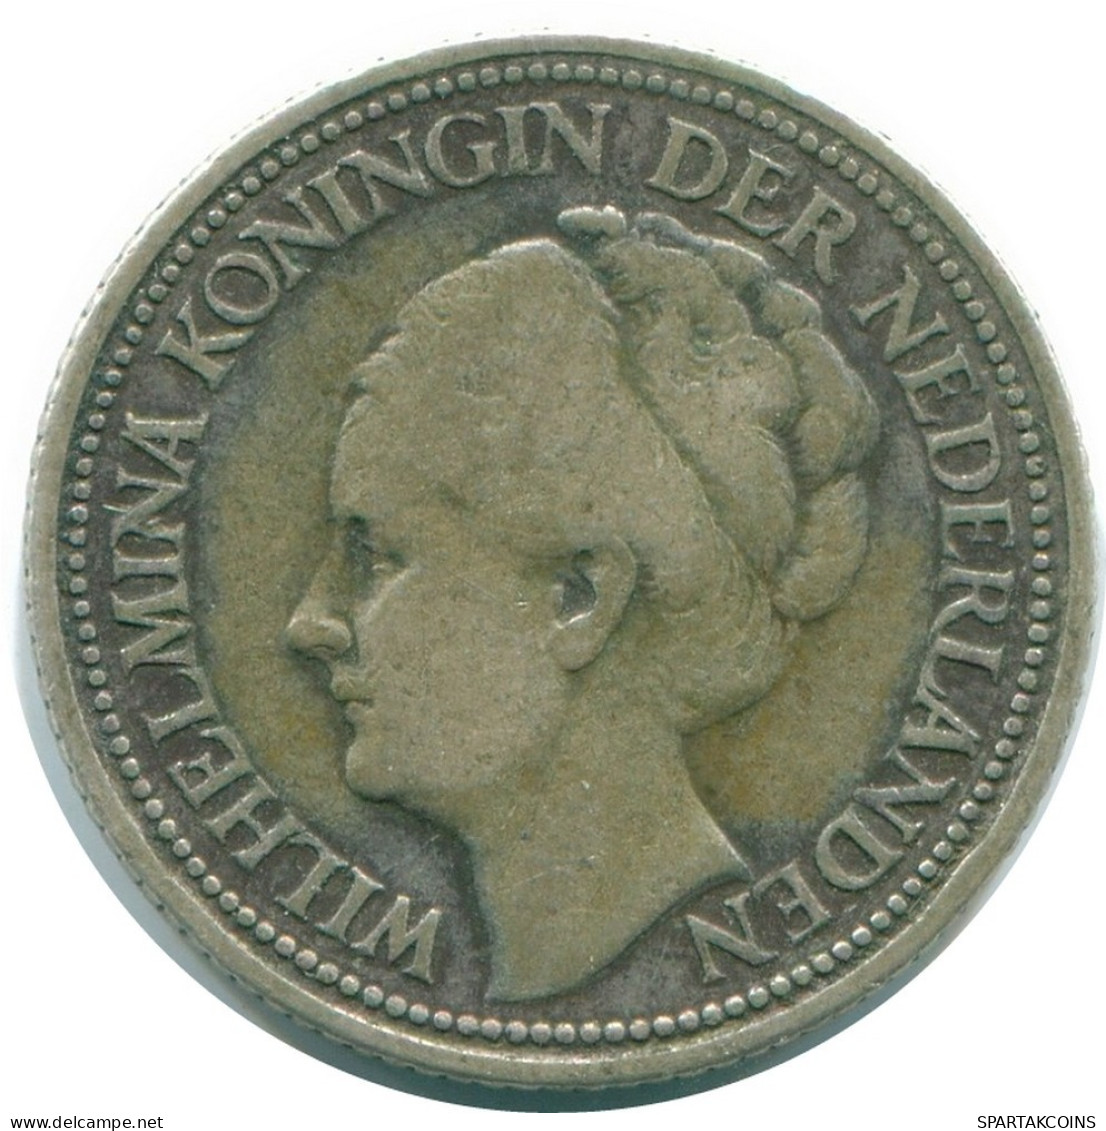 1/4 GULDEN 1947 CURACAO Netherlands SILVER Colonial Coin #NL10803.4.U.A - Curaçao